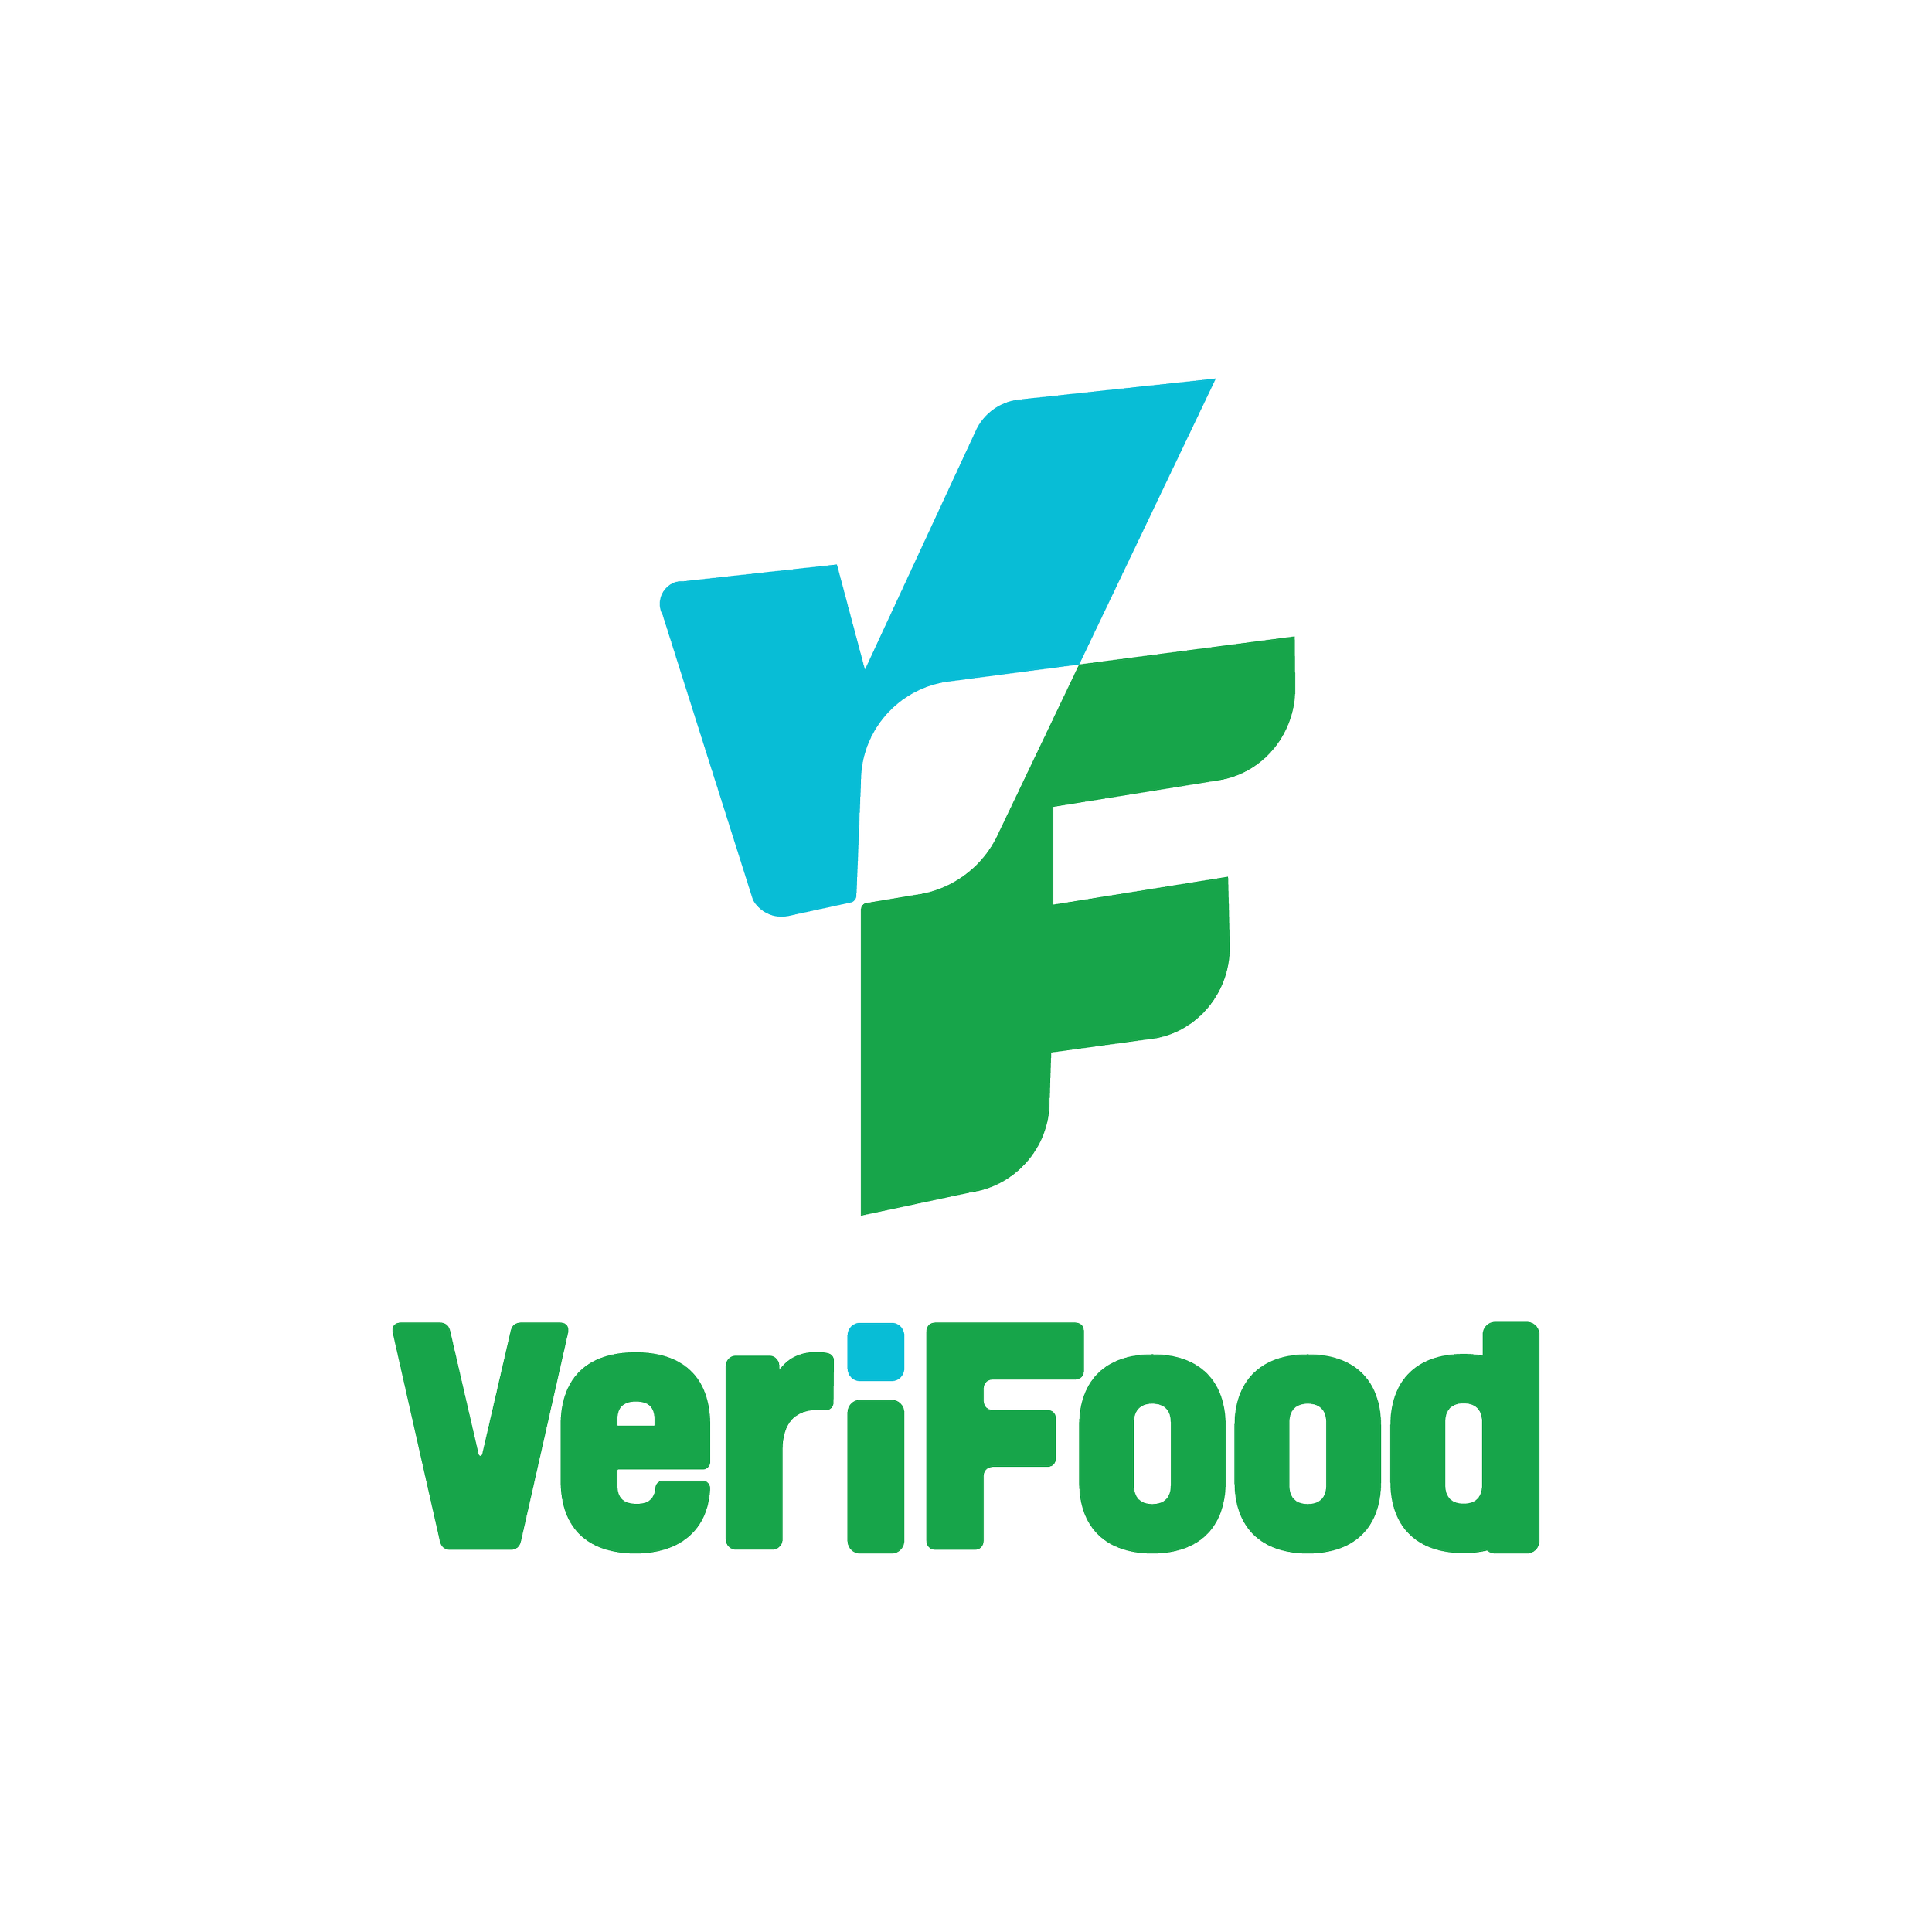 VeriFood-Logo-Concepts-R2-FINAL-option2-variations-01.png